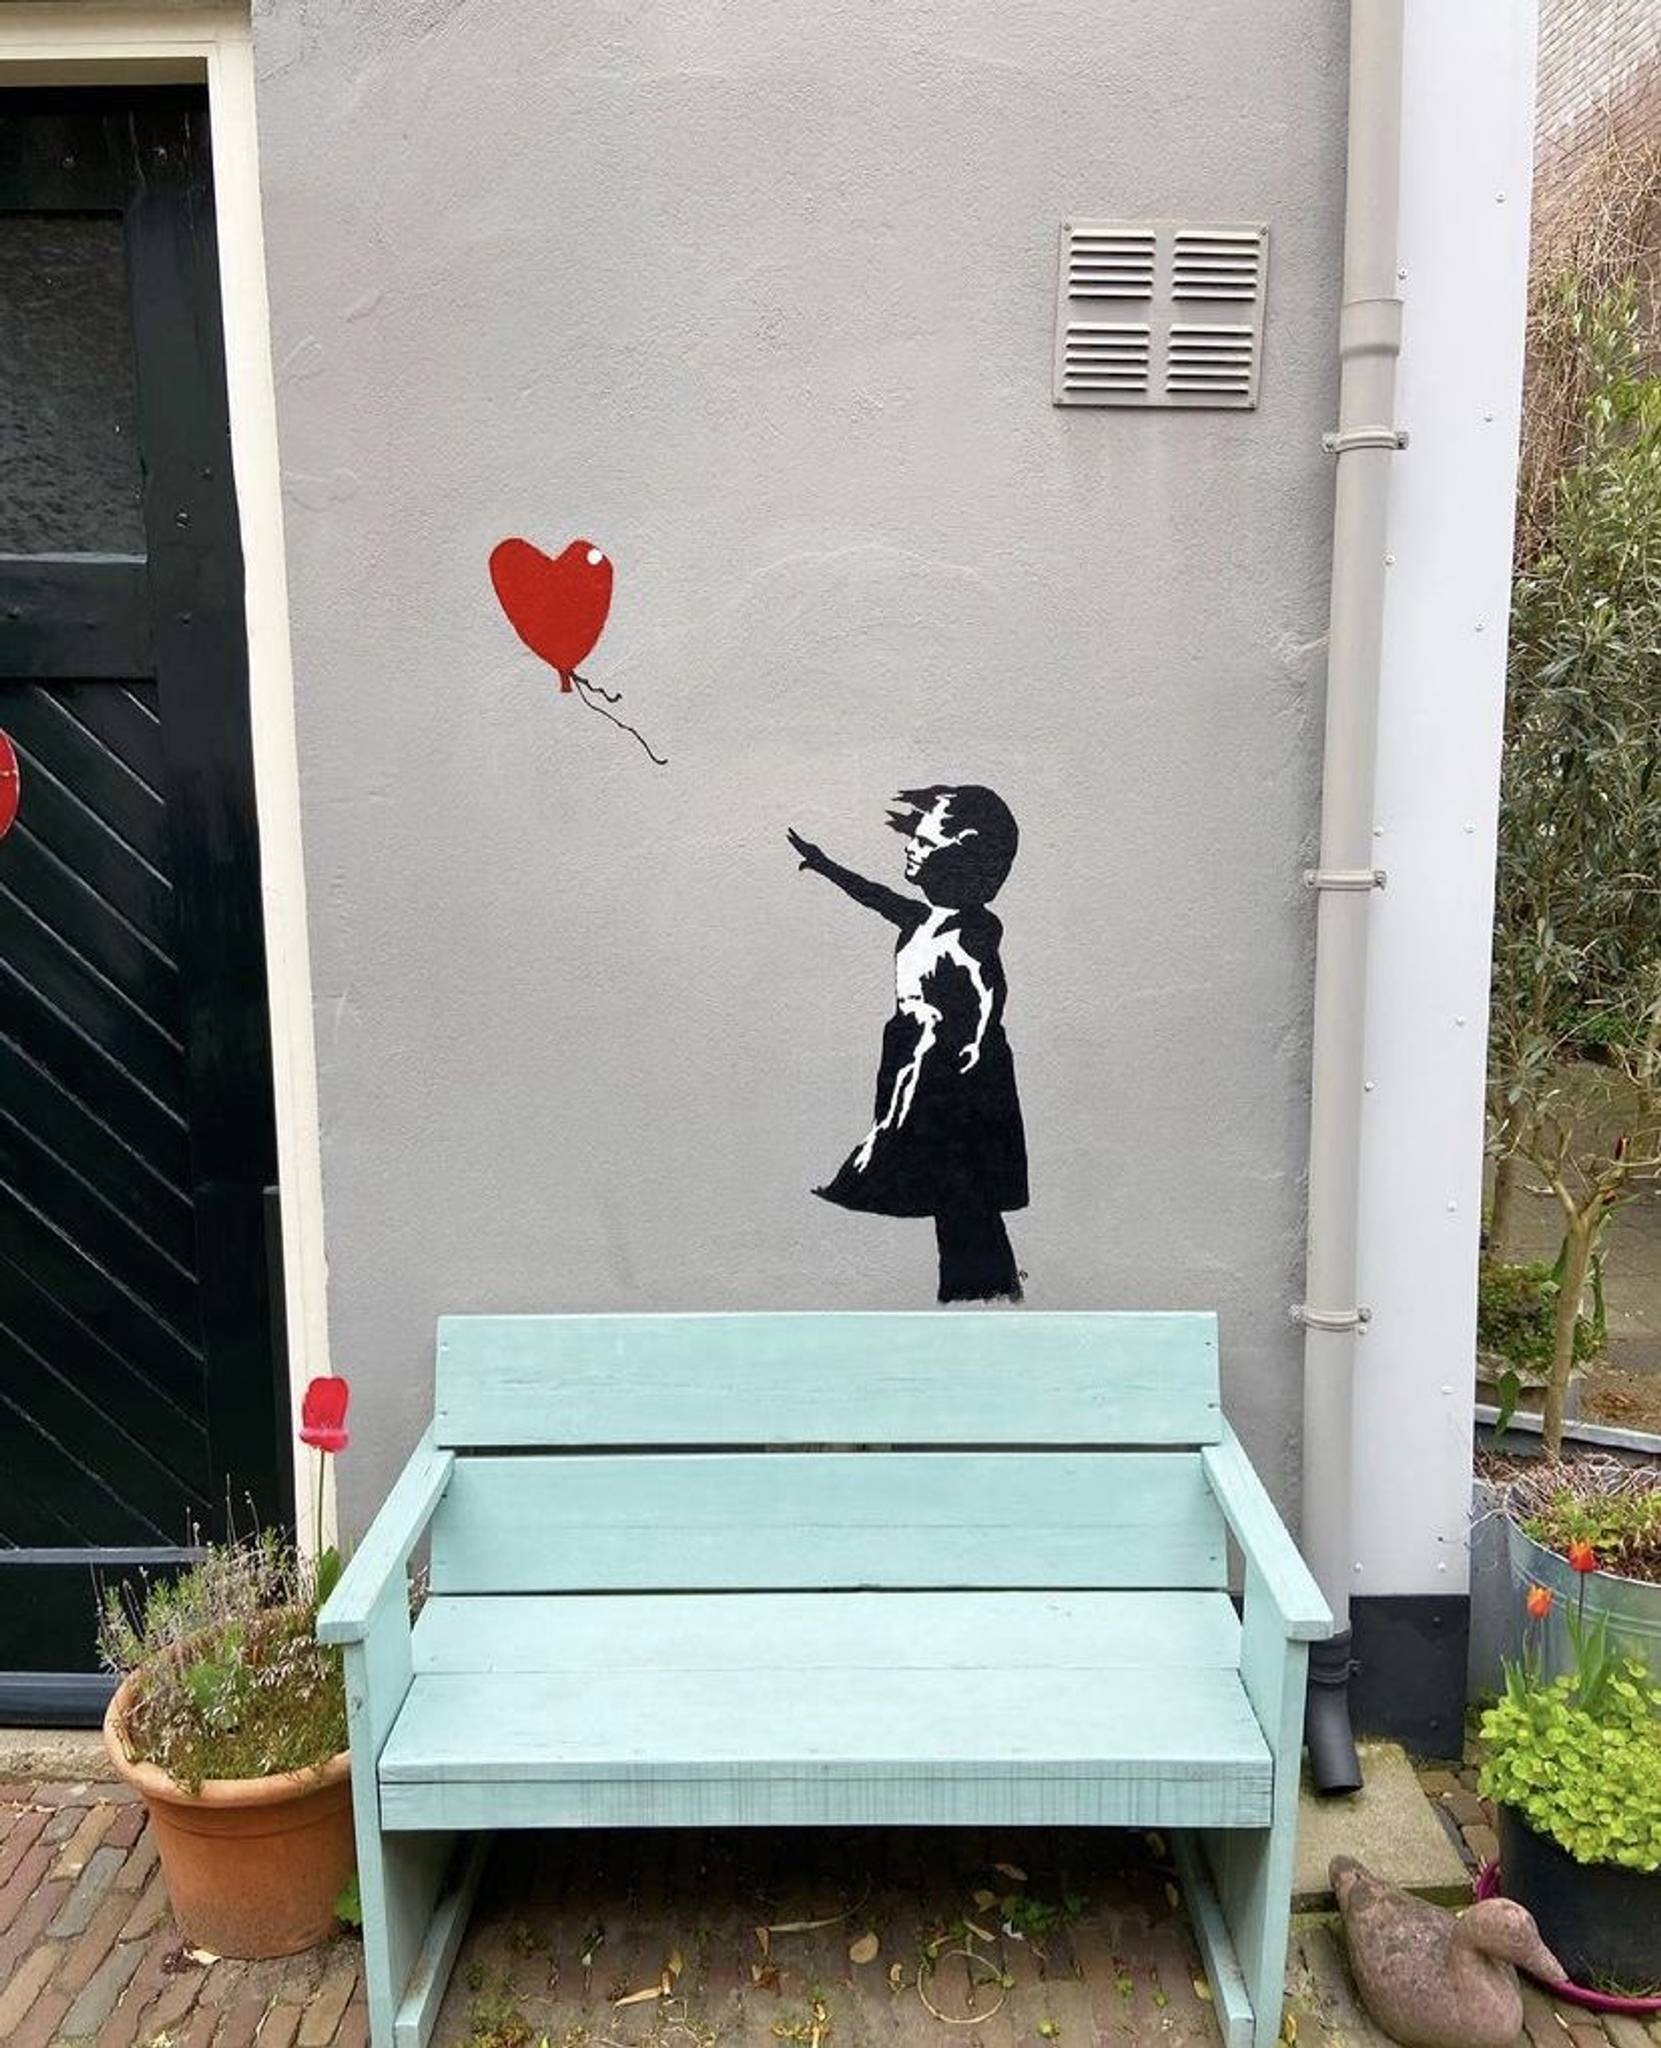 Unknown - Haarlem&mdash;Tribute to Banksy